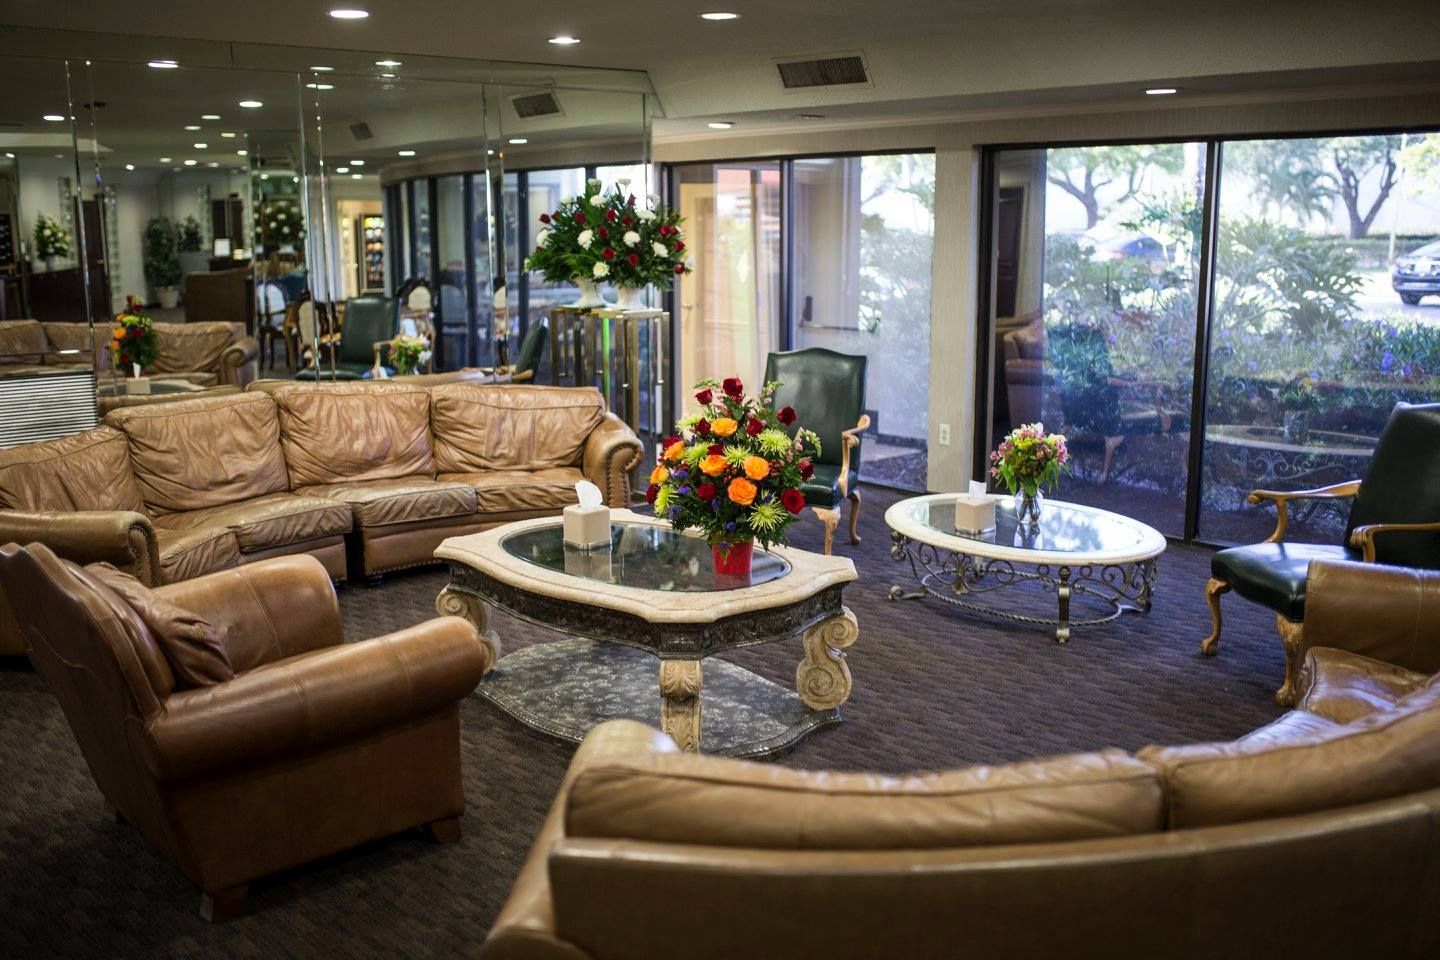 Reception area of Vista Funeral Home in Miami Lakes, Florida.